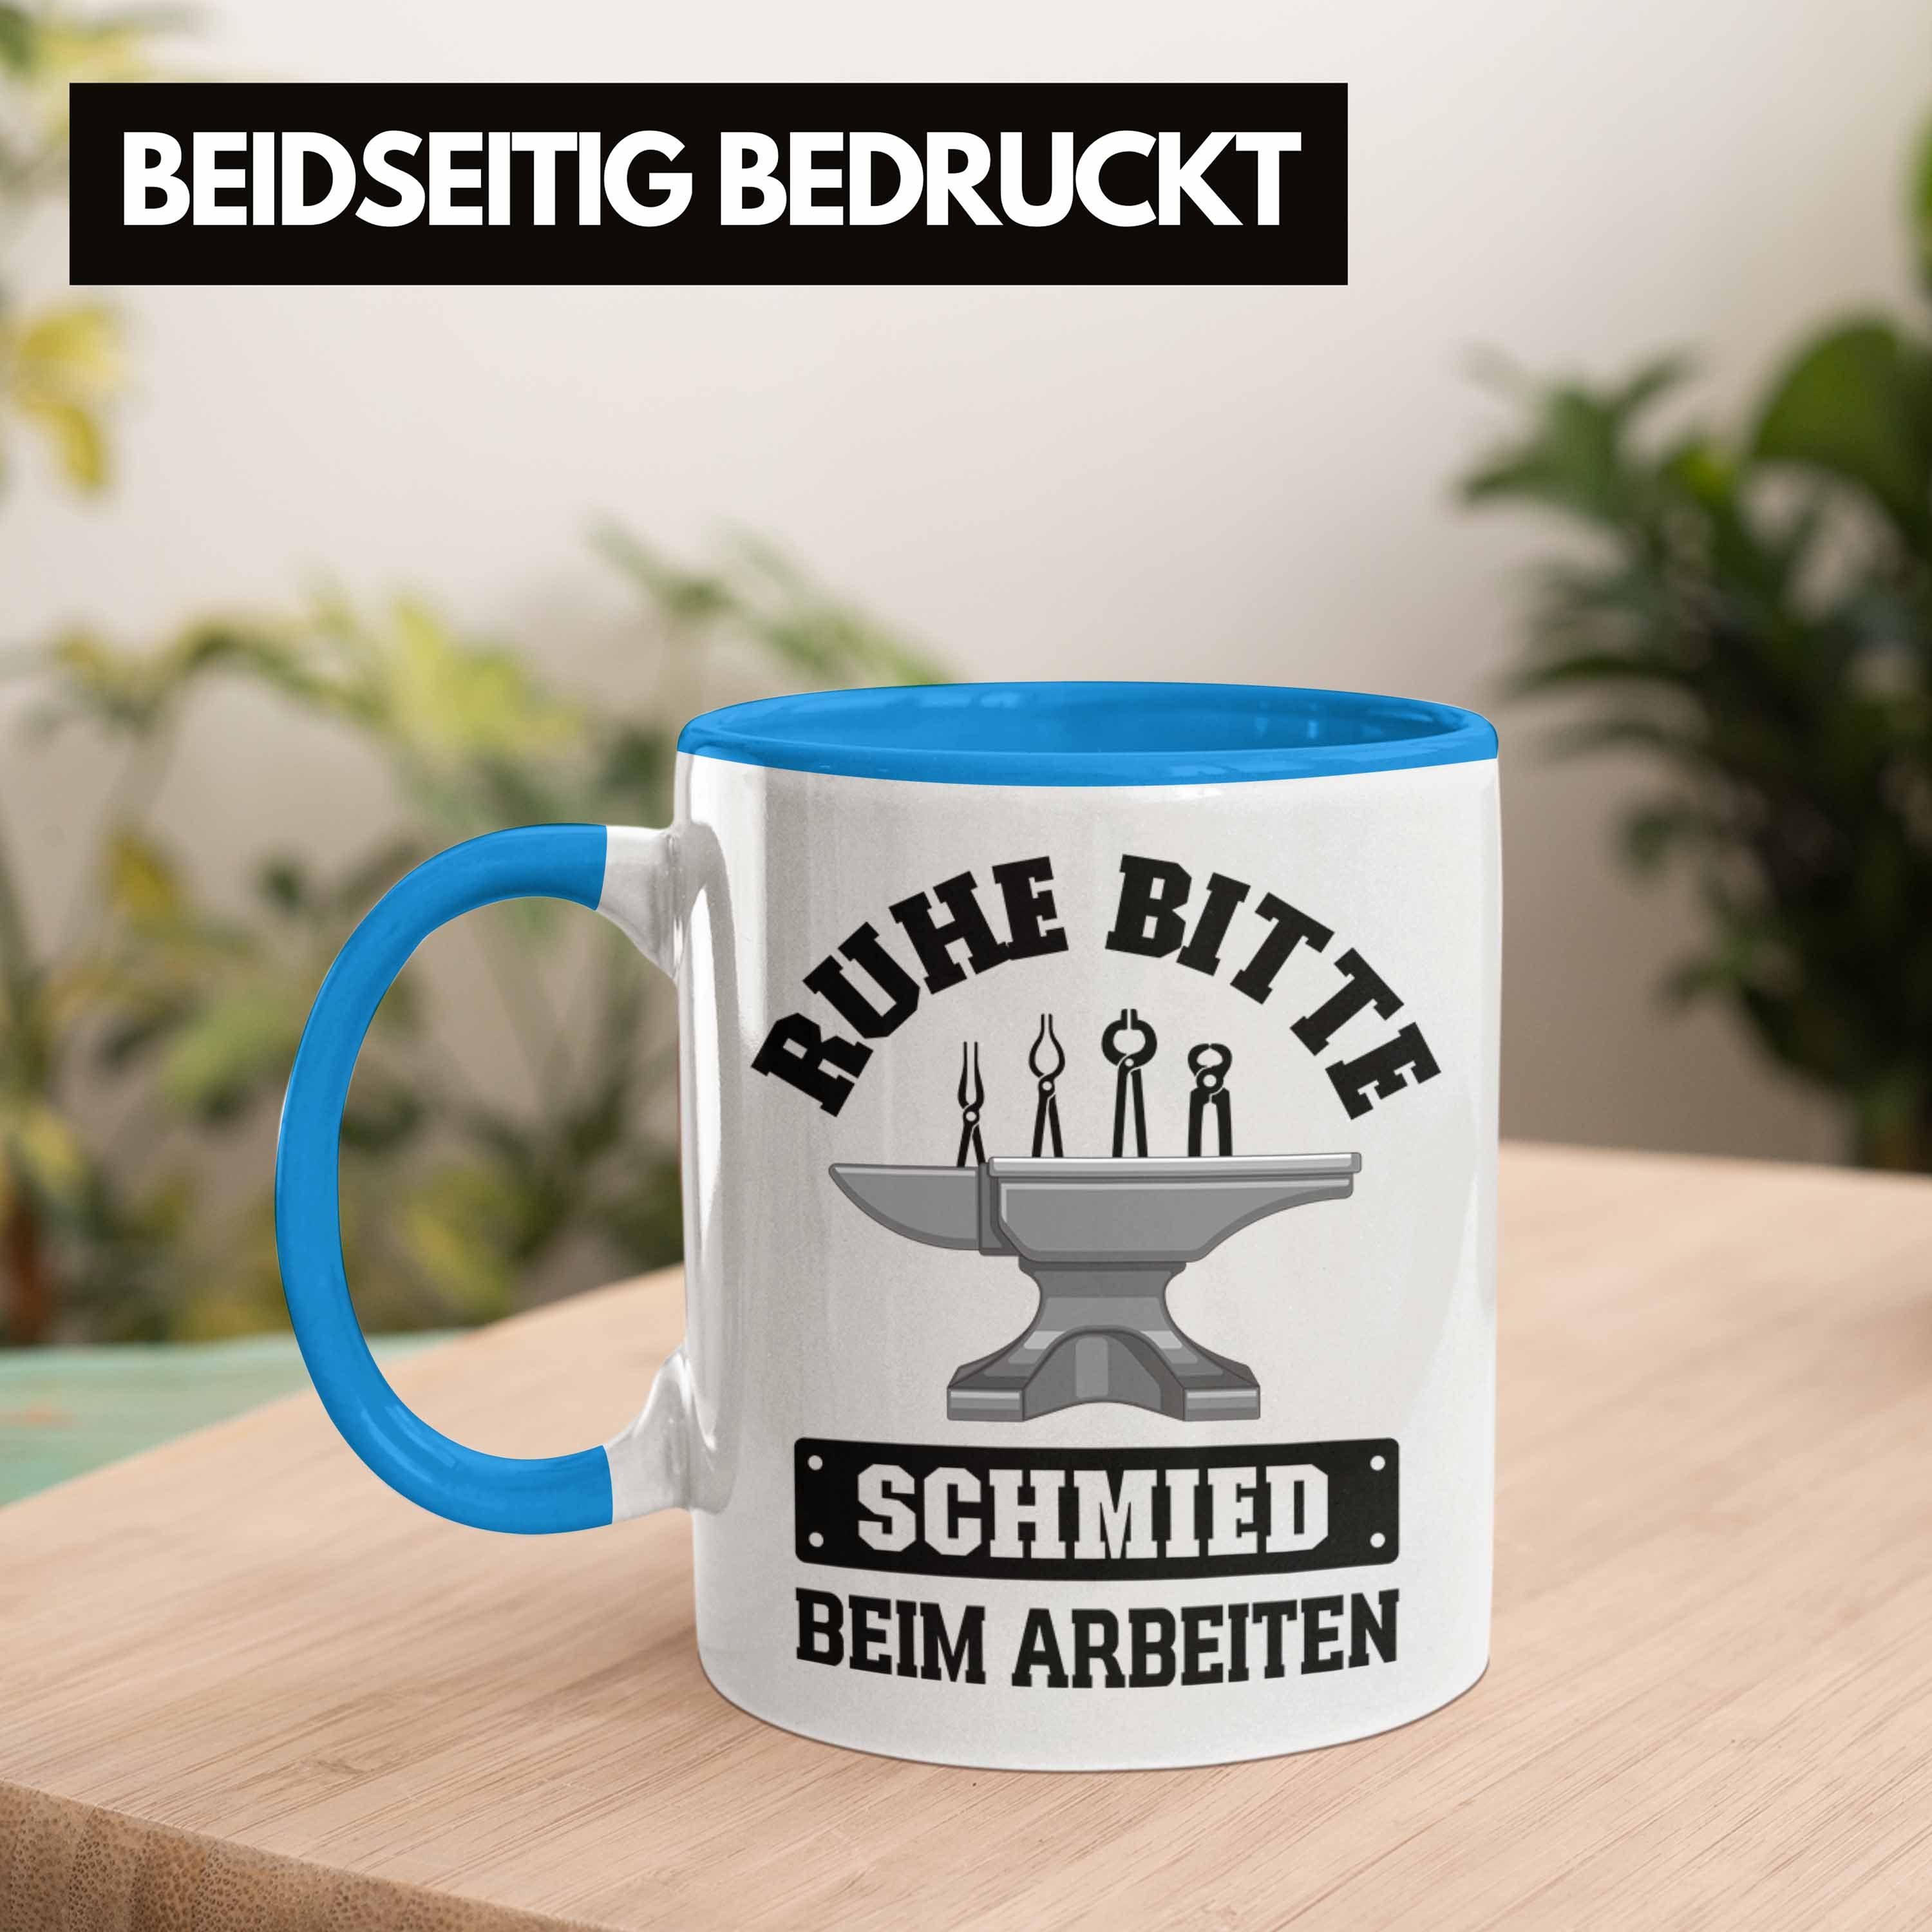 Trendation Tasse Spruch Kaffeetasse Blau Geschenke Trendation mit Hufschmied - Schmied Tasse Geschenkidee